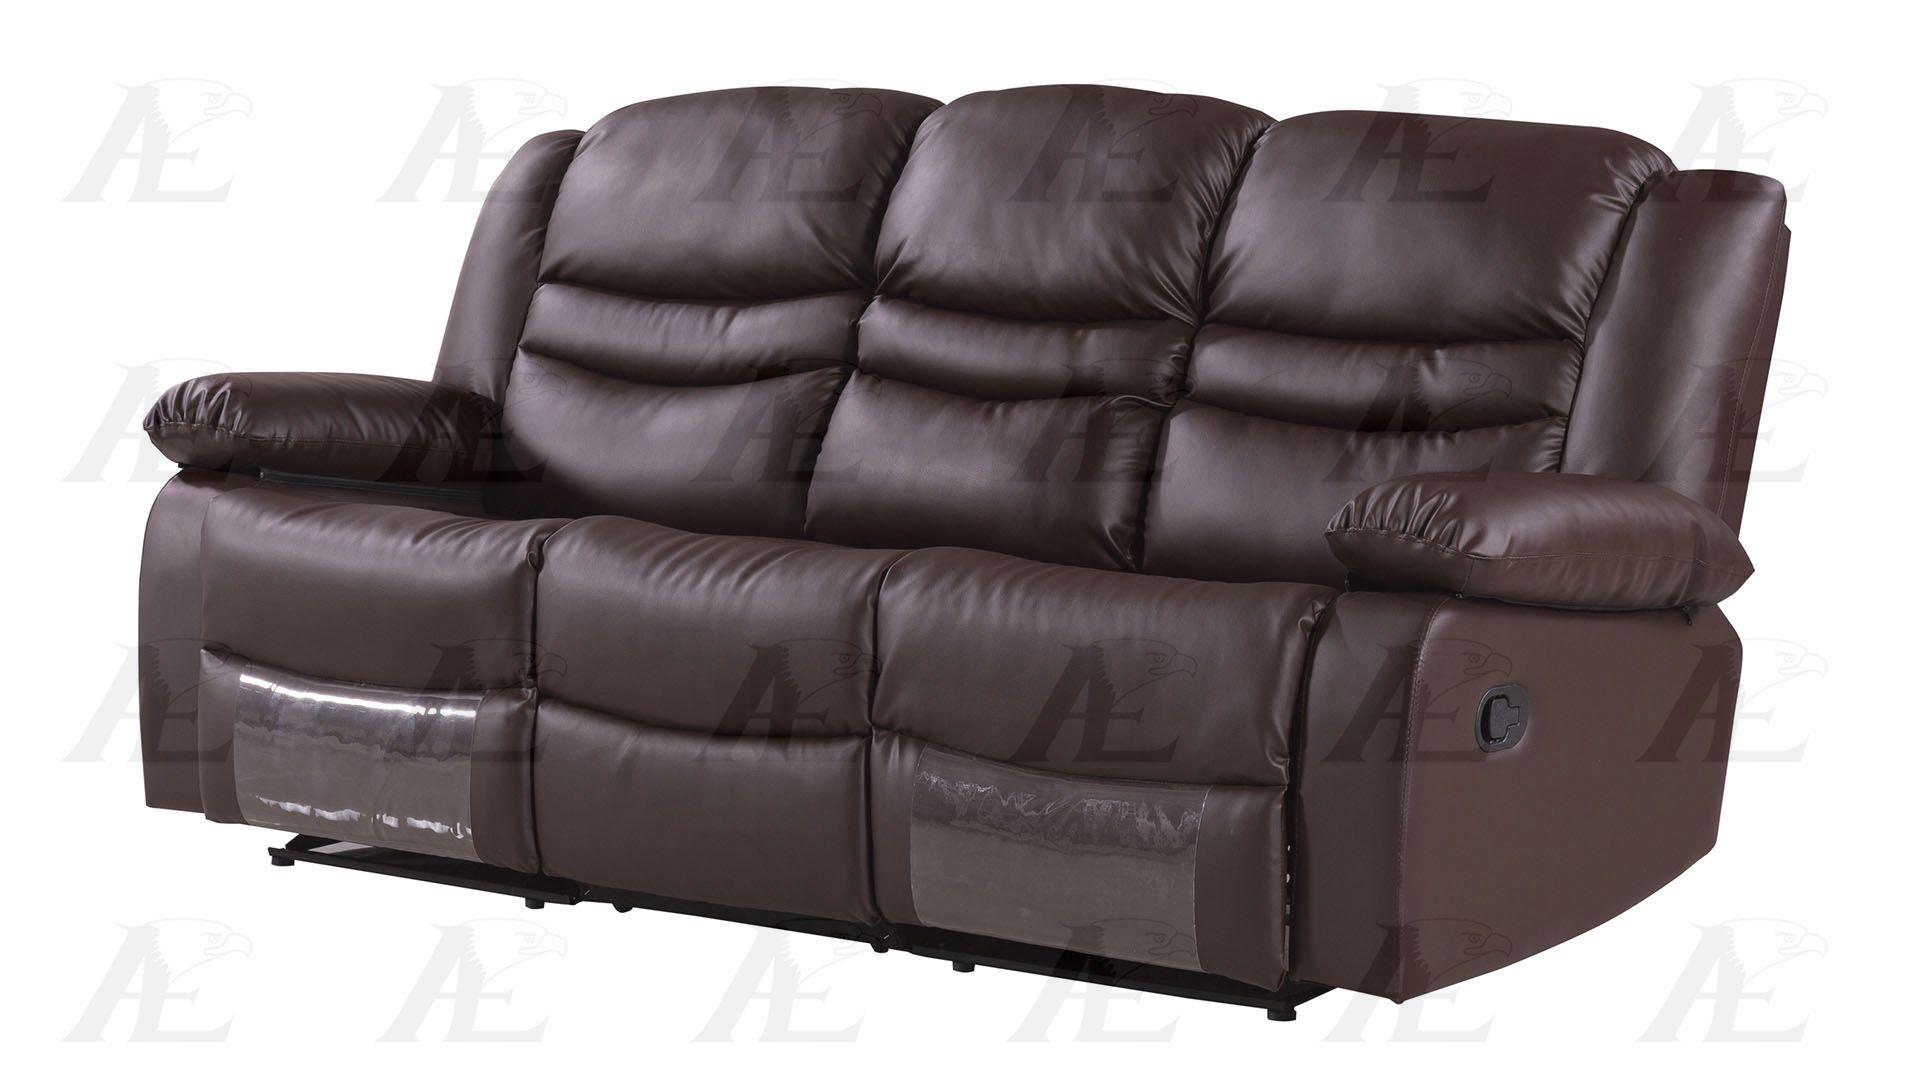 

    
American Eagle Modern AE-D823 Dark Brown Faux Leather Recliner Sofa
